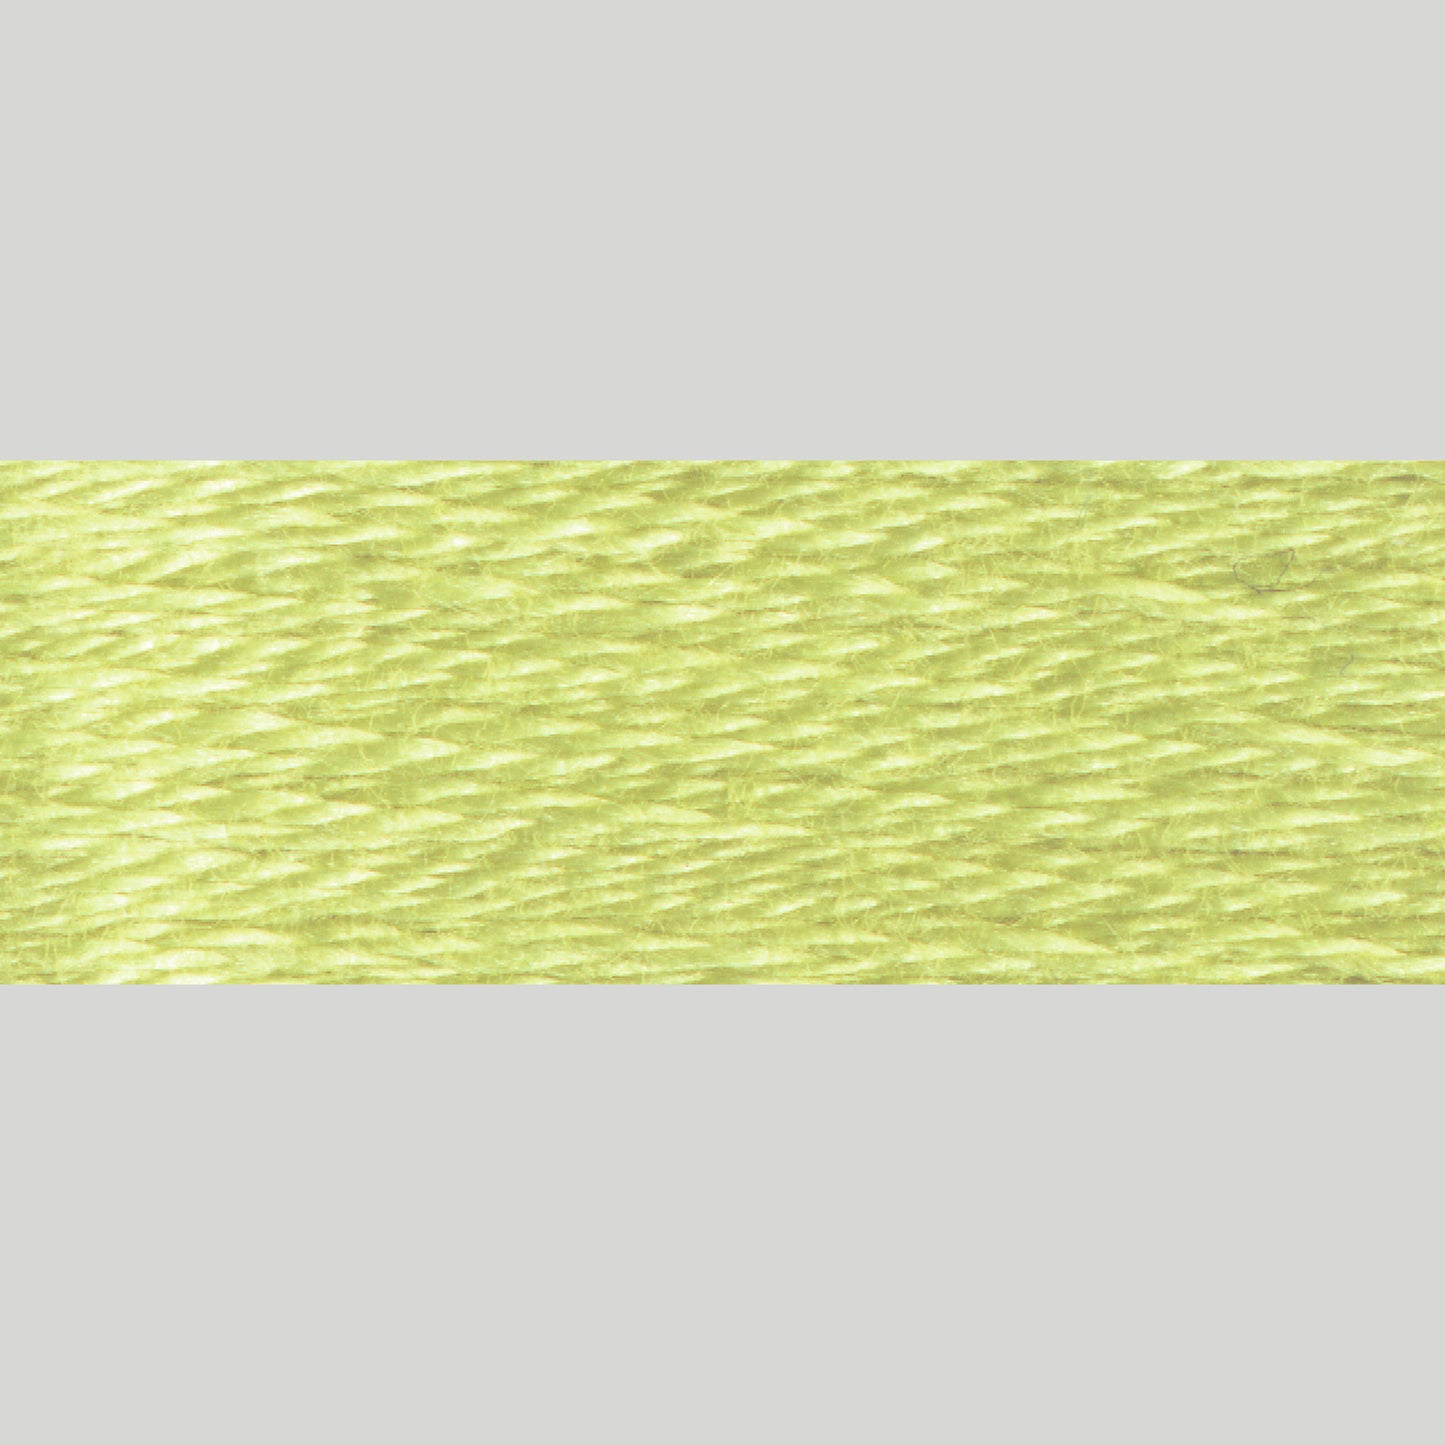 DMC Embroidery Floss - 3348 Light Yellow Green Alternative View #1